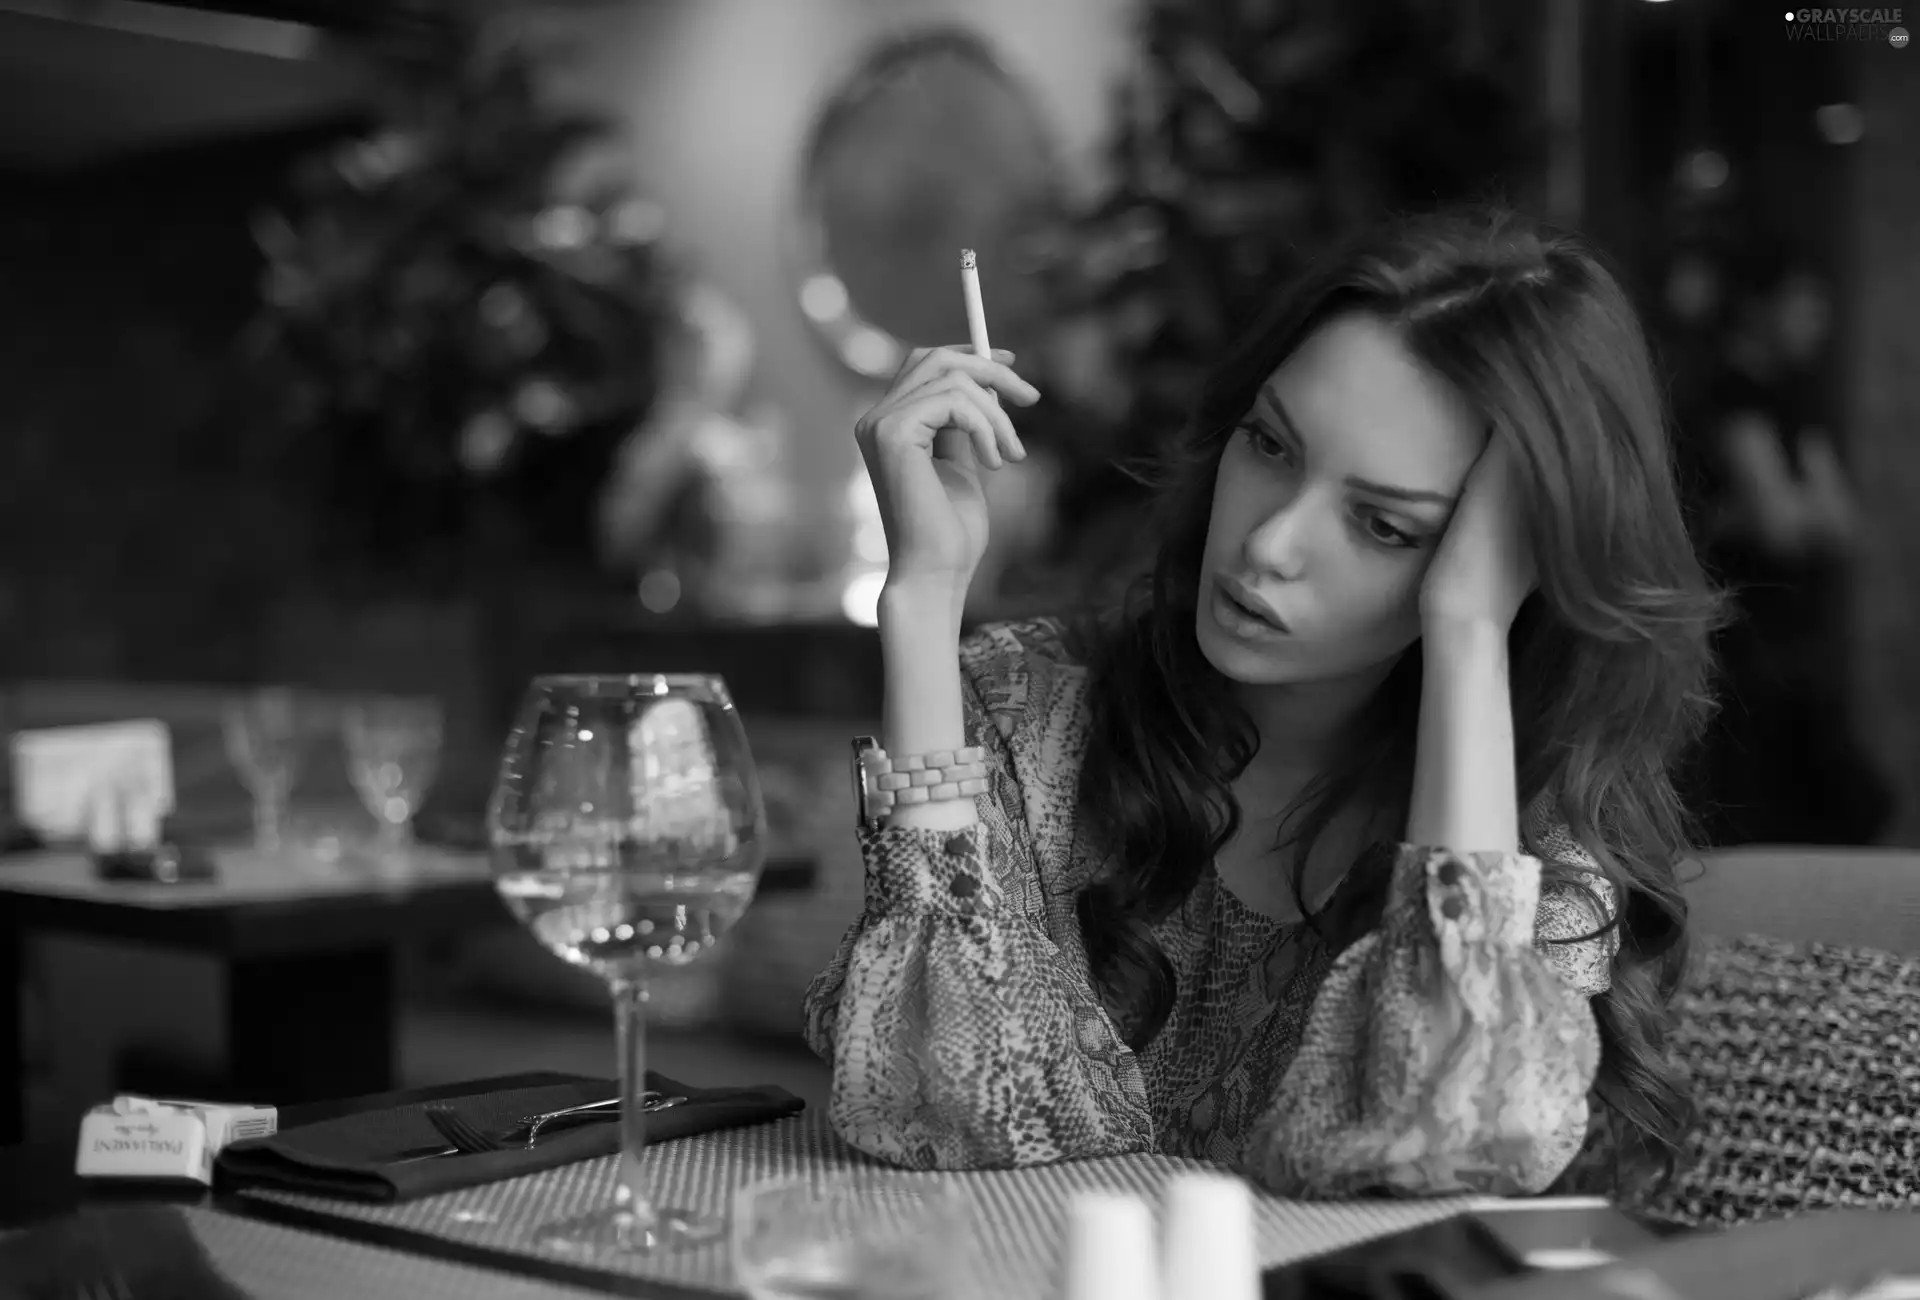 Cigarette, brunette, cafe, Watch, Women, a glass of wine, table